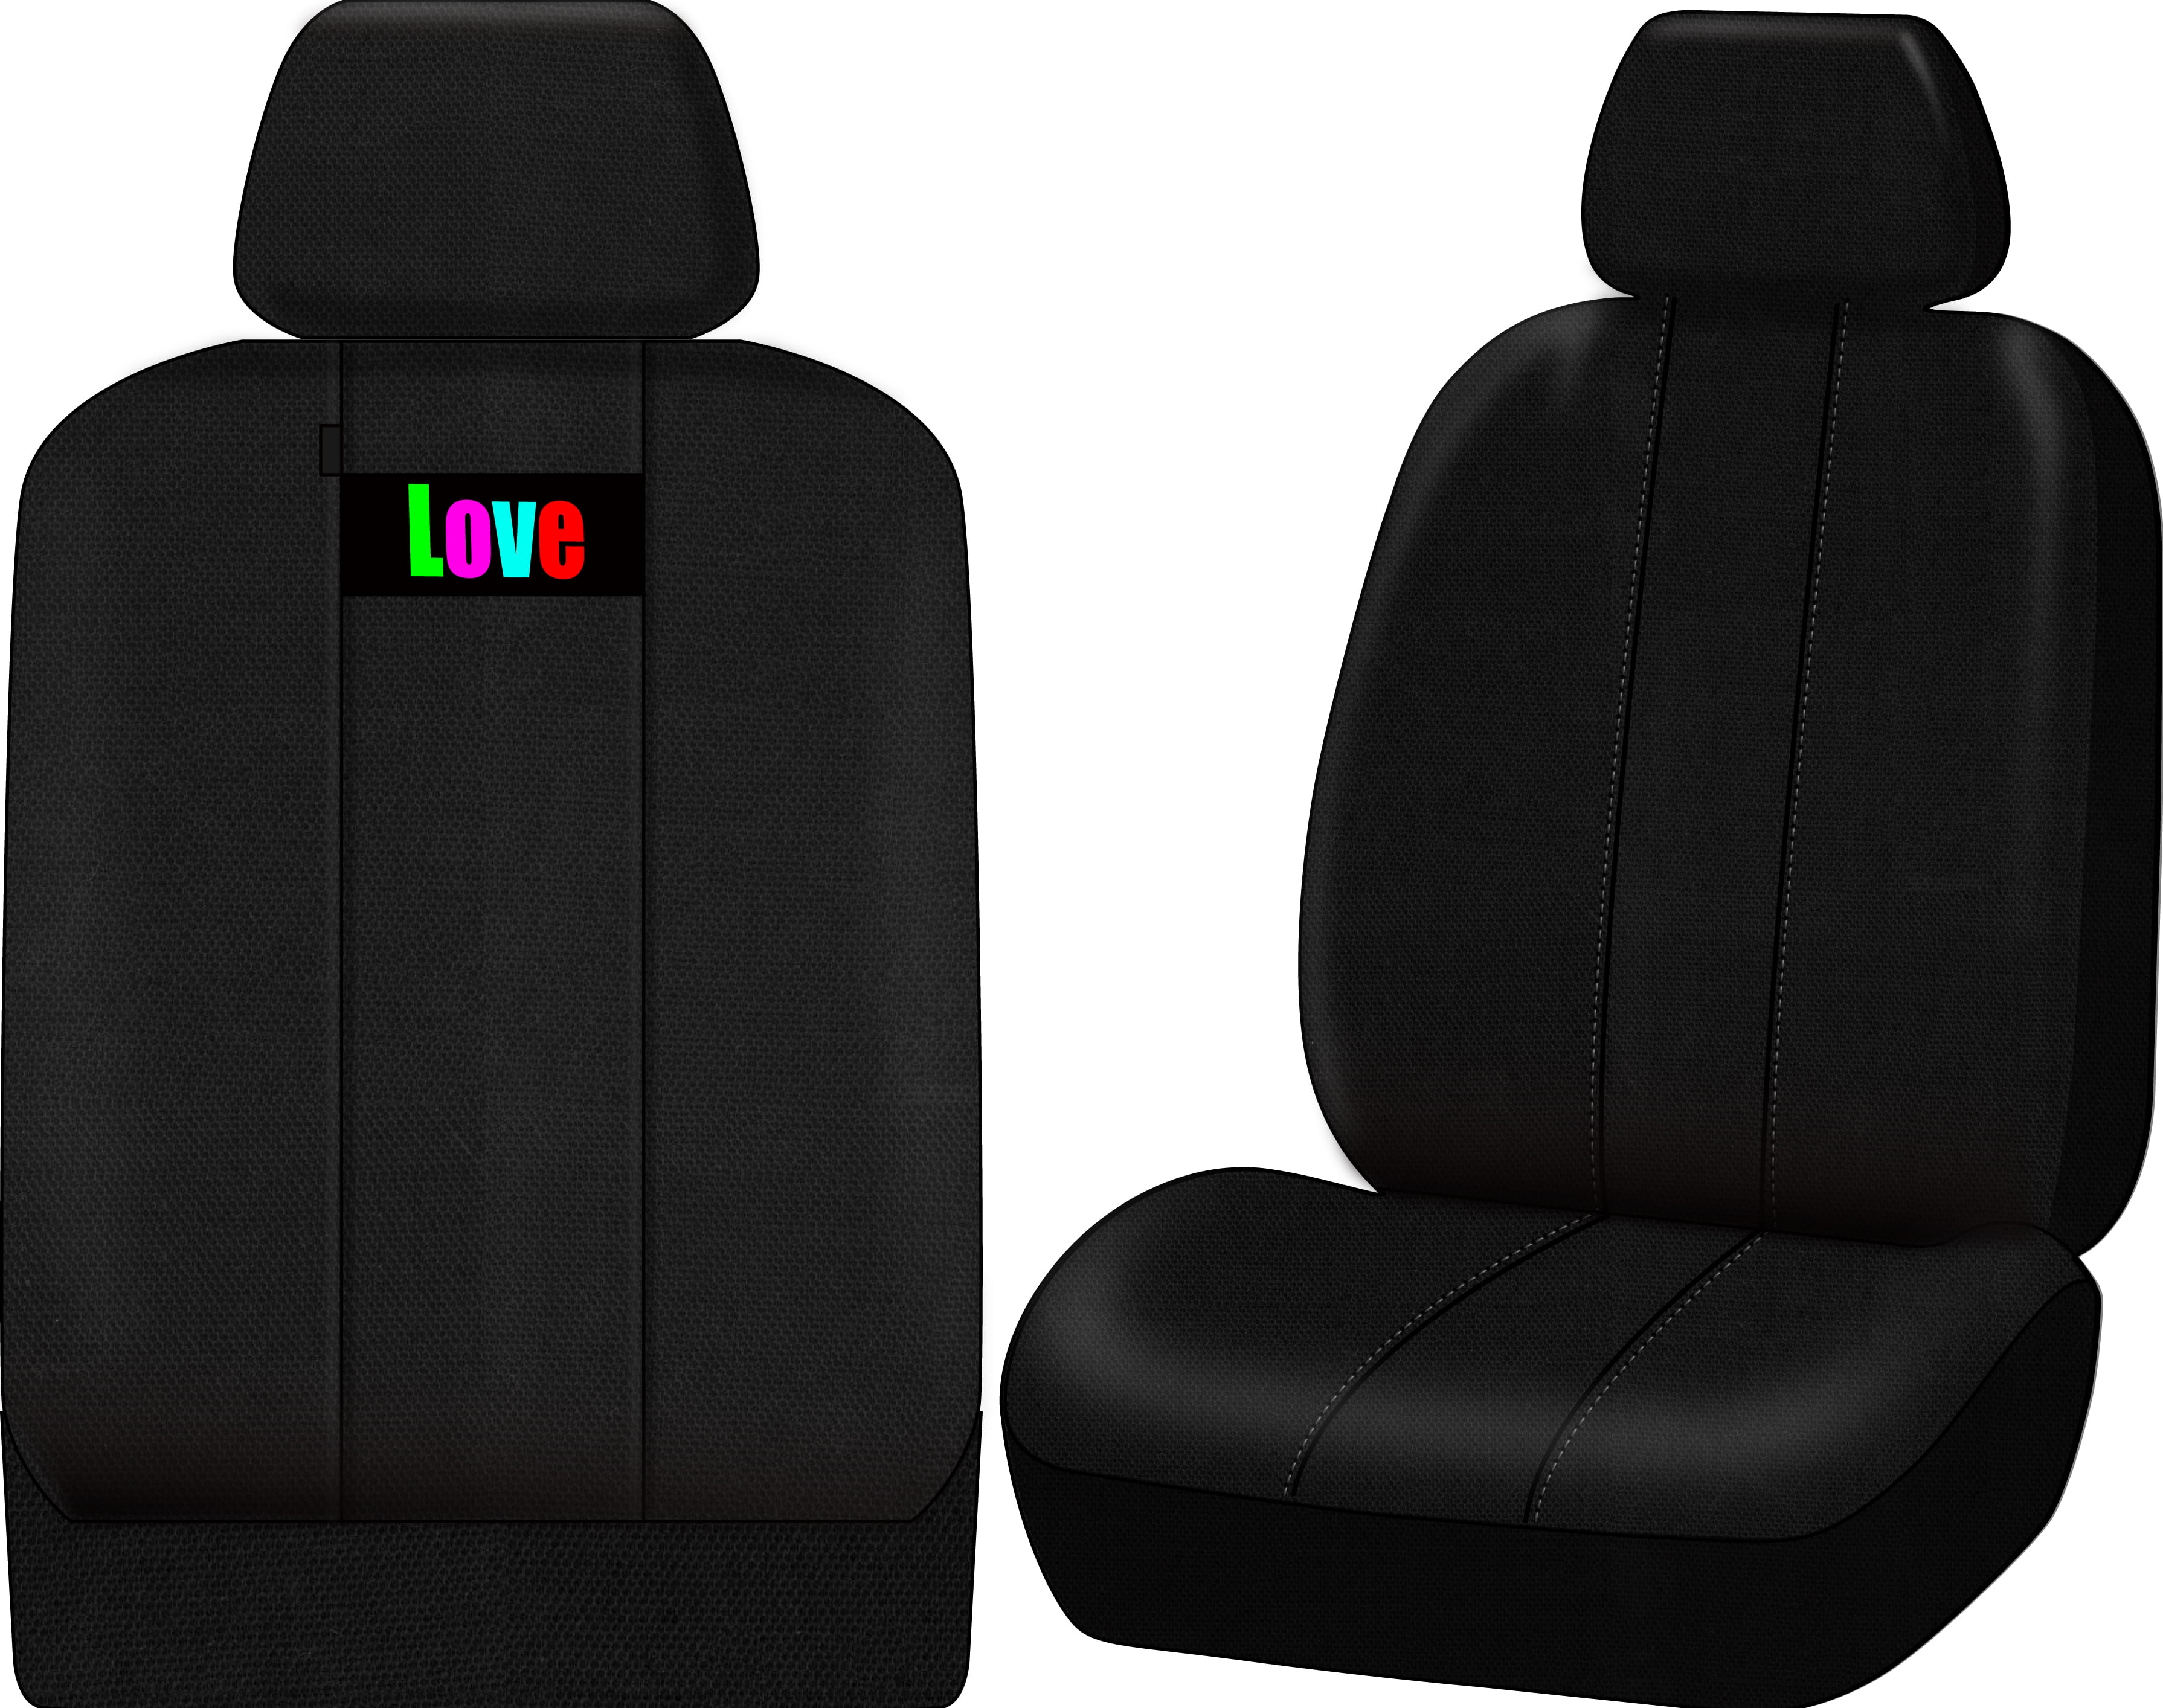 Auto Drive LED Programmable Car Seat Cover, Black, Set of 1, Fits Cars,  Suvs, MPVs 